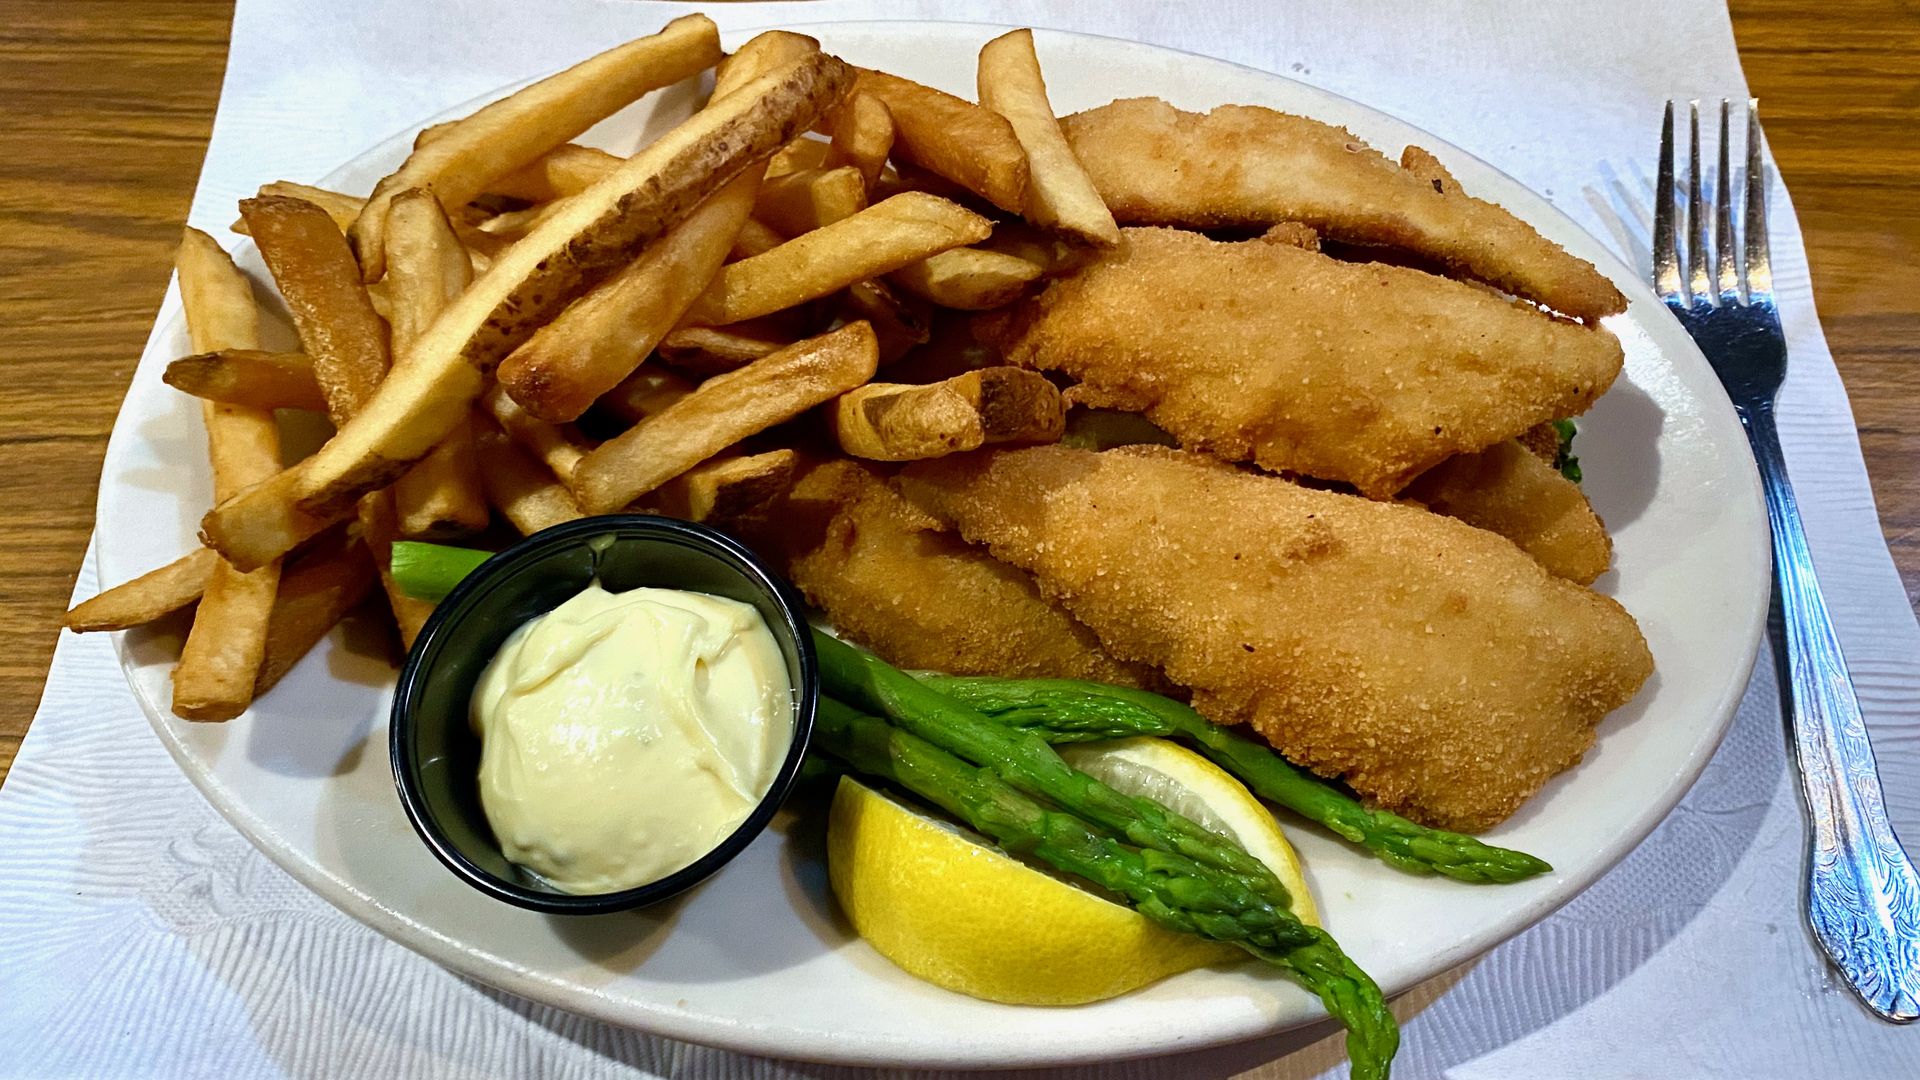 Perch. fries, asparagus, a lemon and tartar sauce on a plate on a wooden table